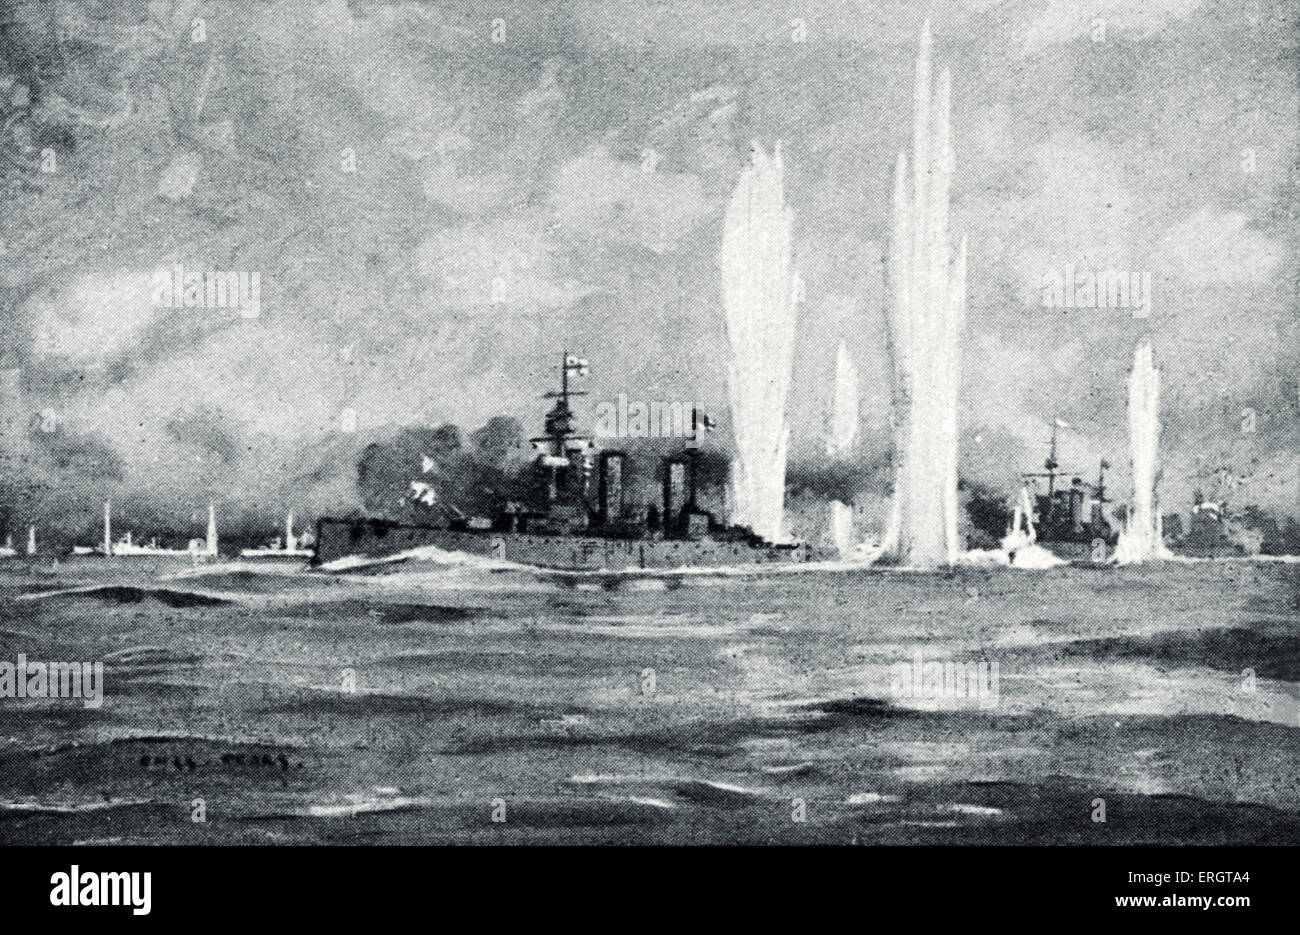 'Jutland' - illustration of the largest naval battle of World War I involving the British Navy and German Navy, 1916. sea. Stock Photo